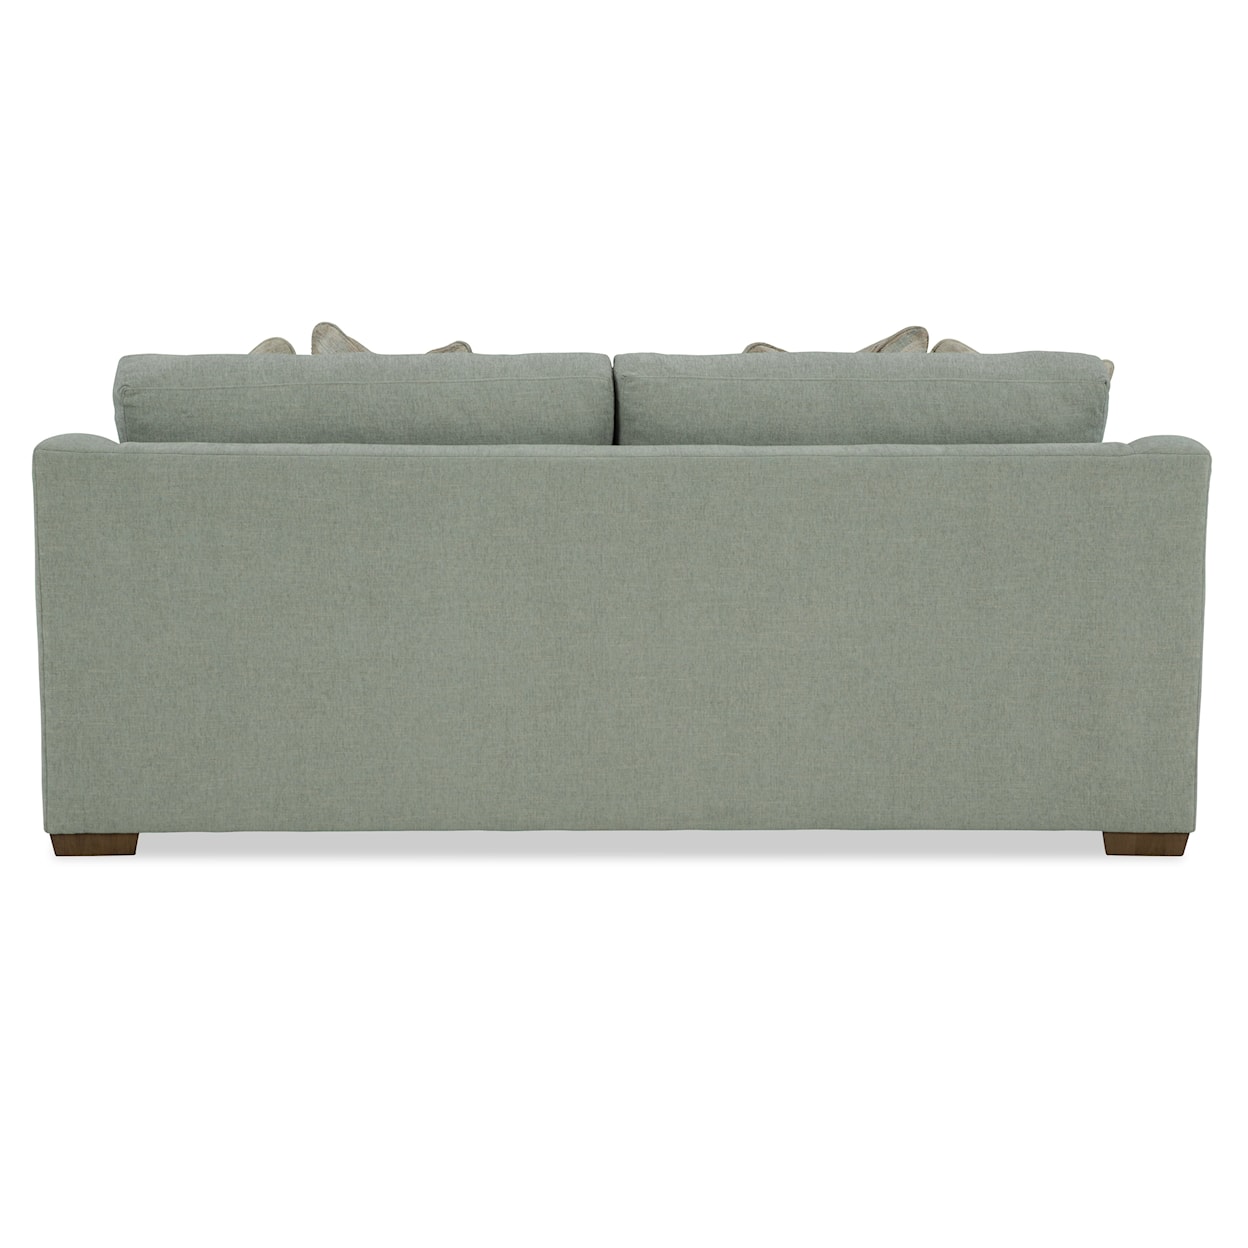 Hickorycraft 735450BD Two Cushion Sofa